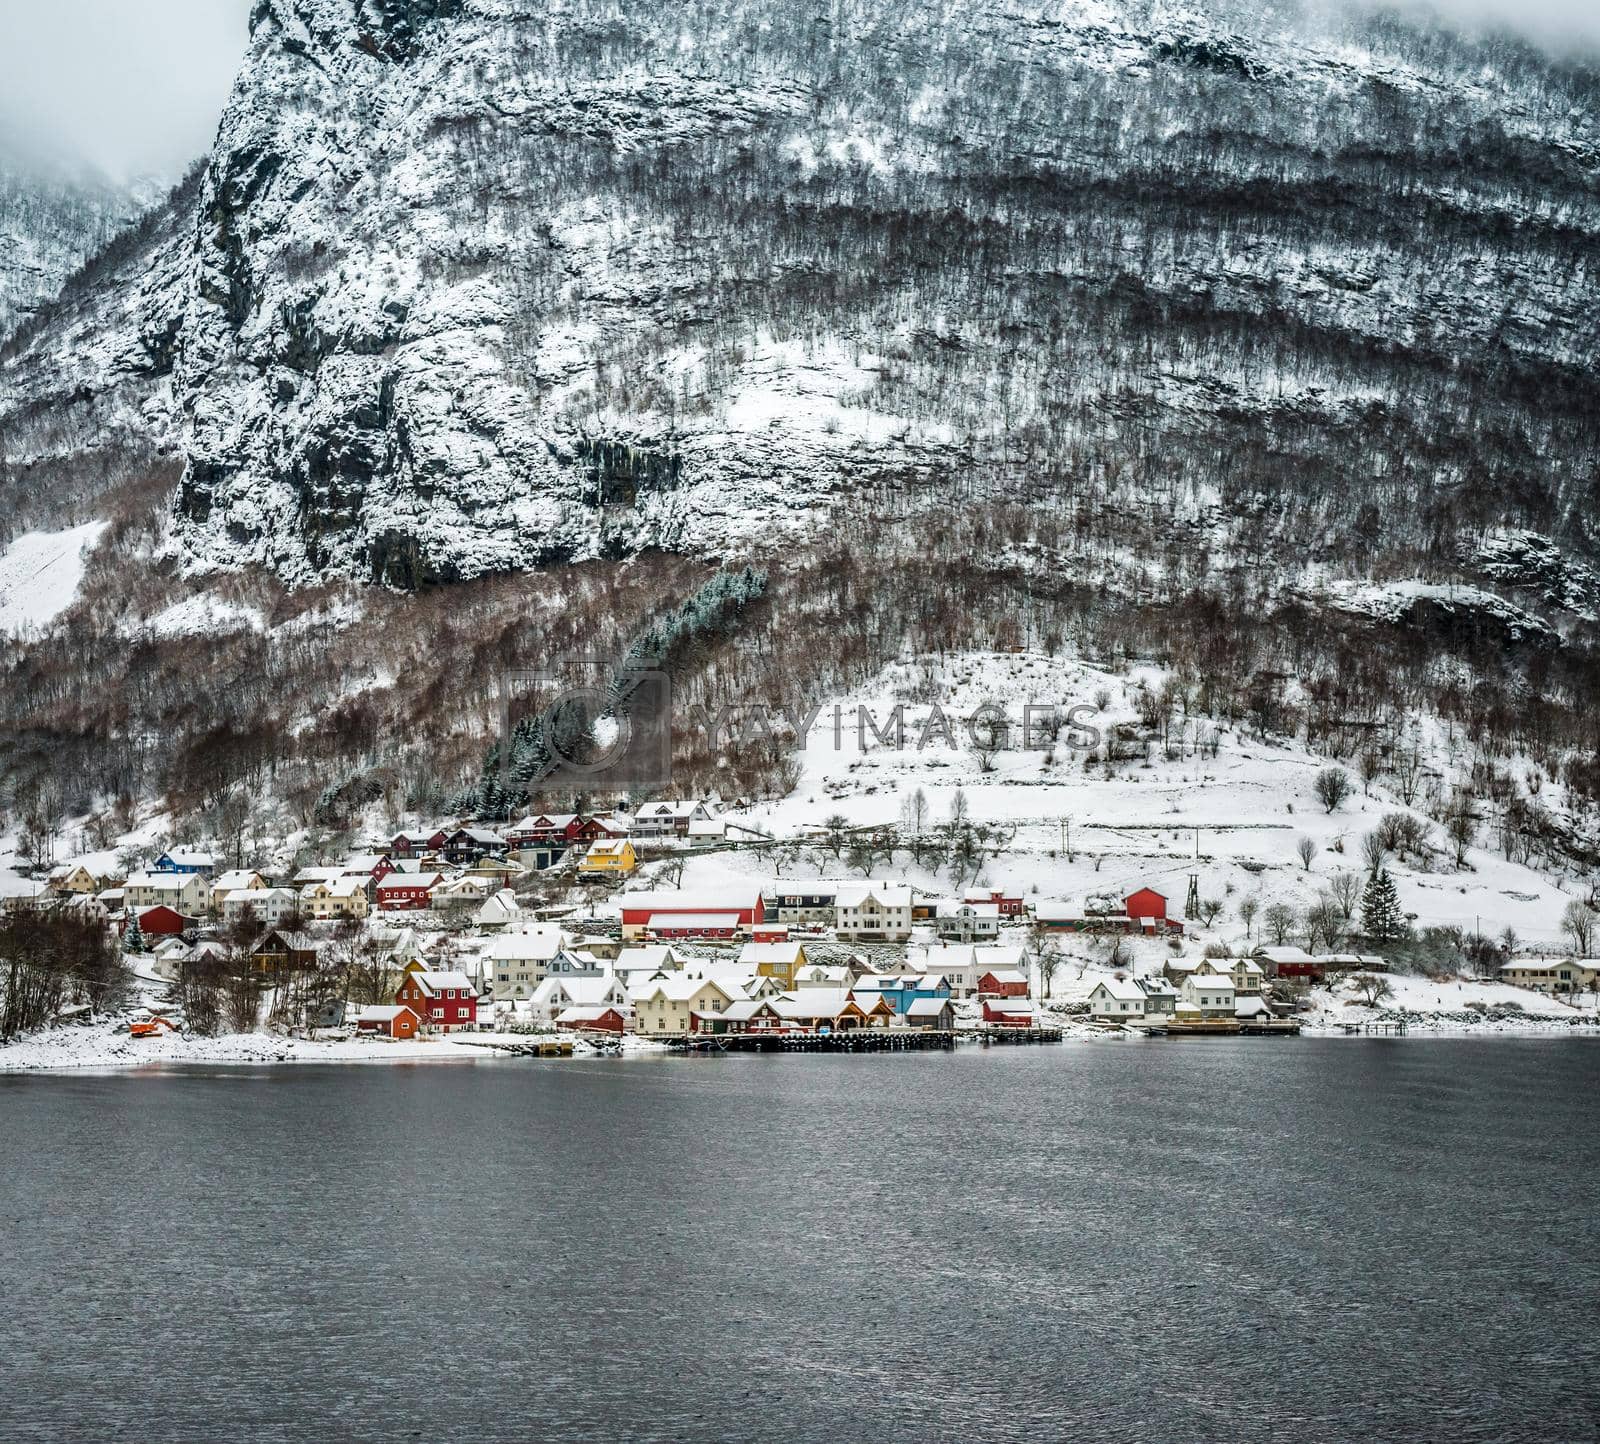 Royalty free image of fjords in Norway by tan4ikk1